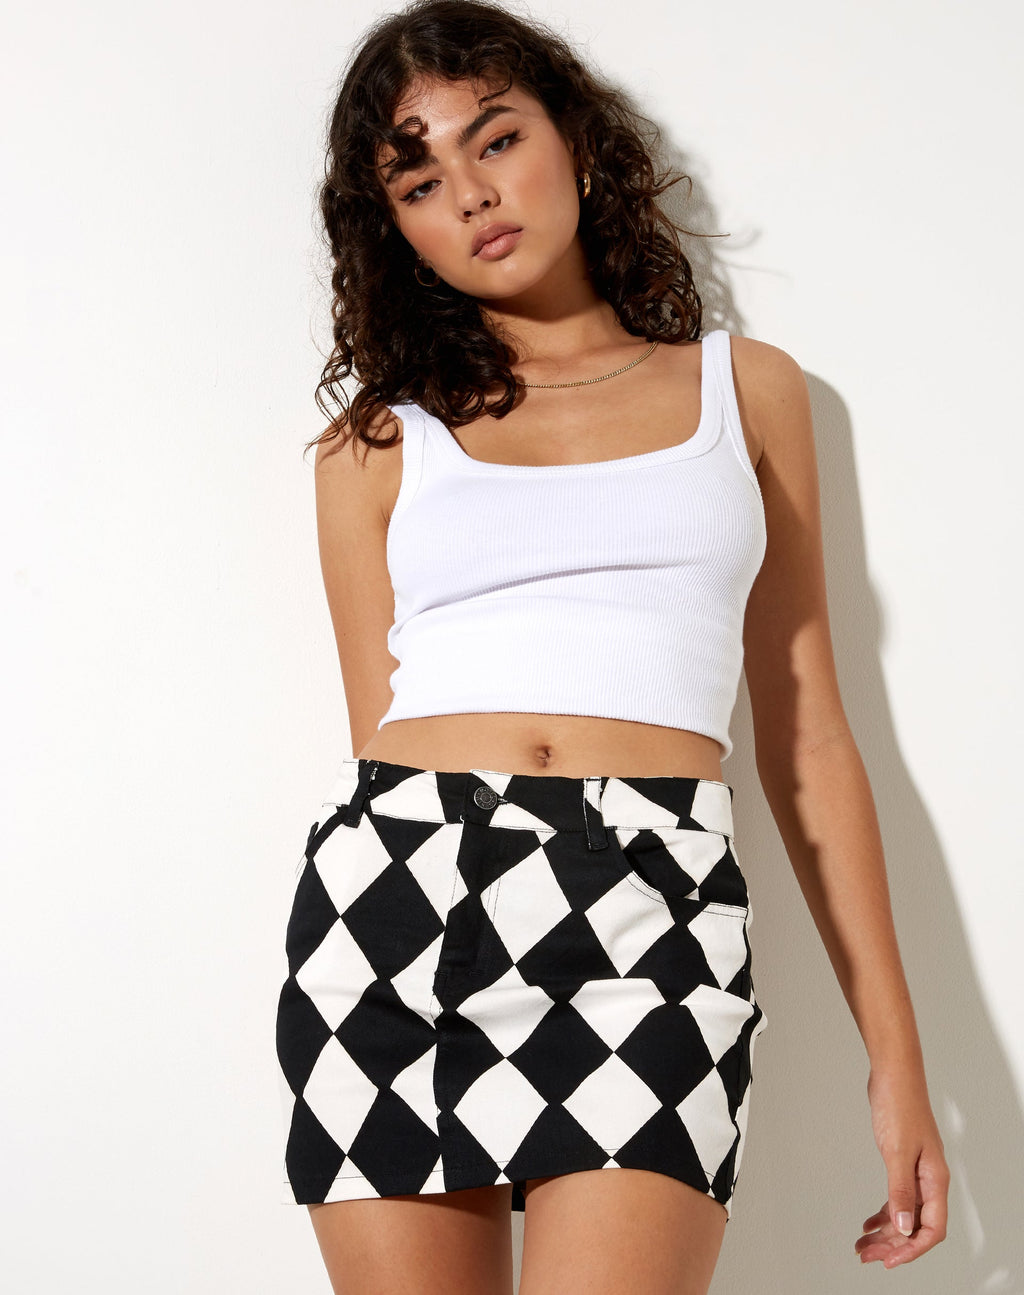 Micro Broomy Mini Skirt in Harlequin Black and White